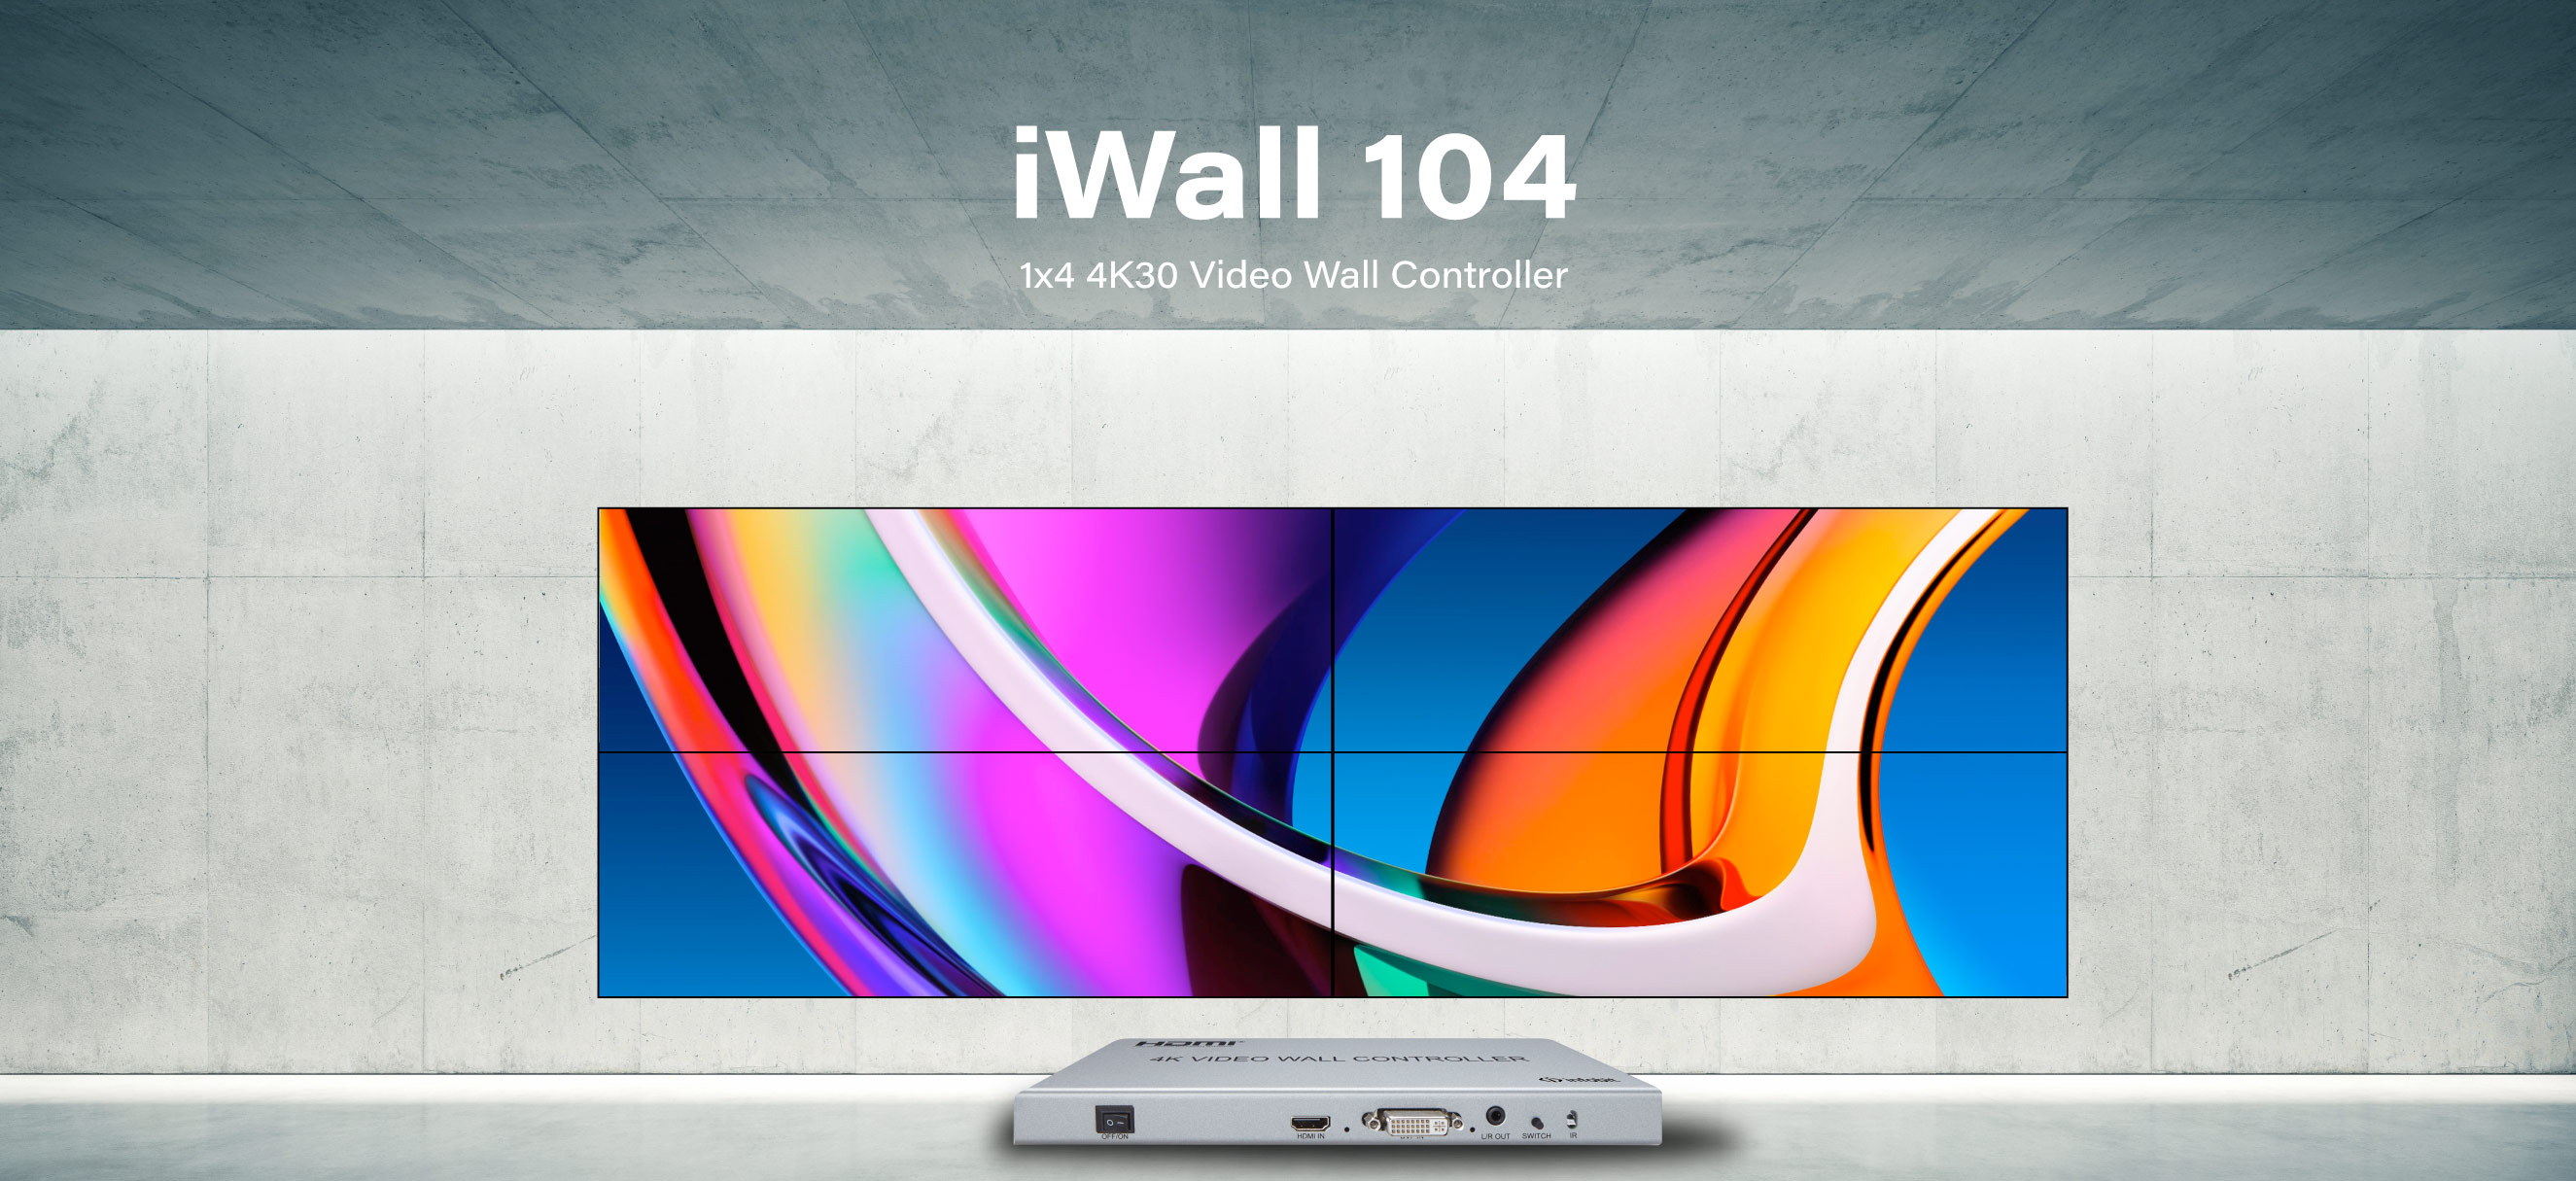 iWall 104 Video Wall Controller